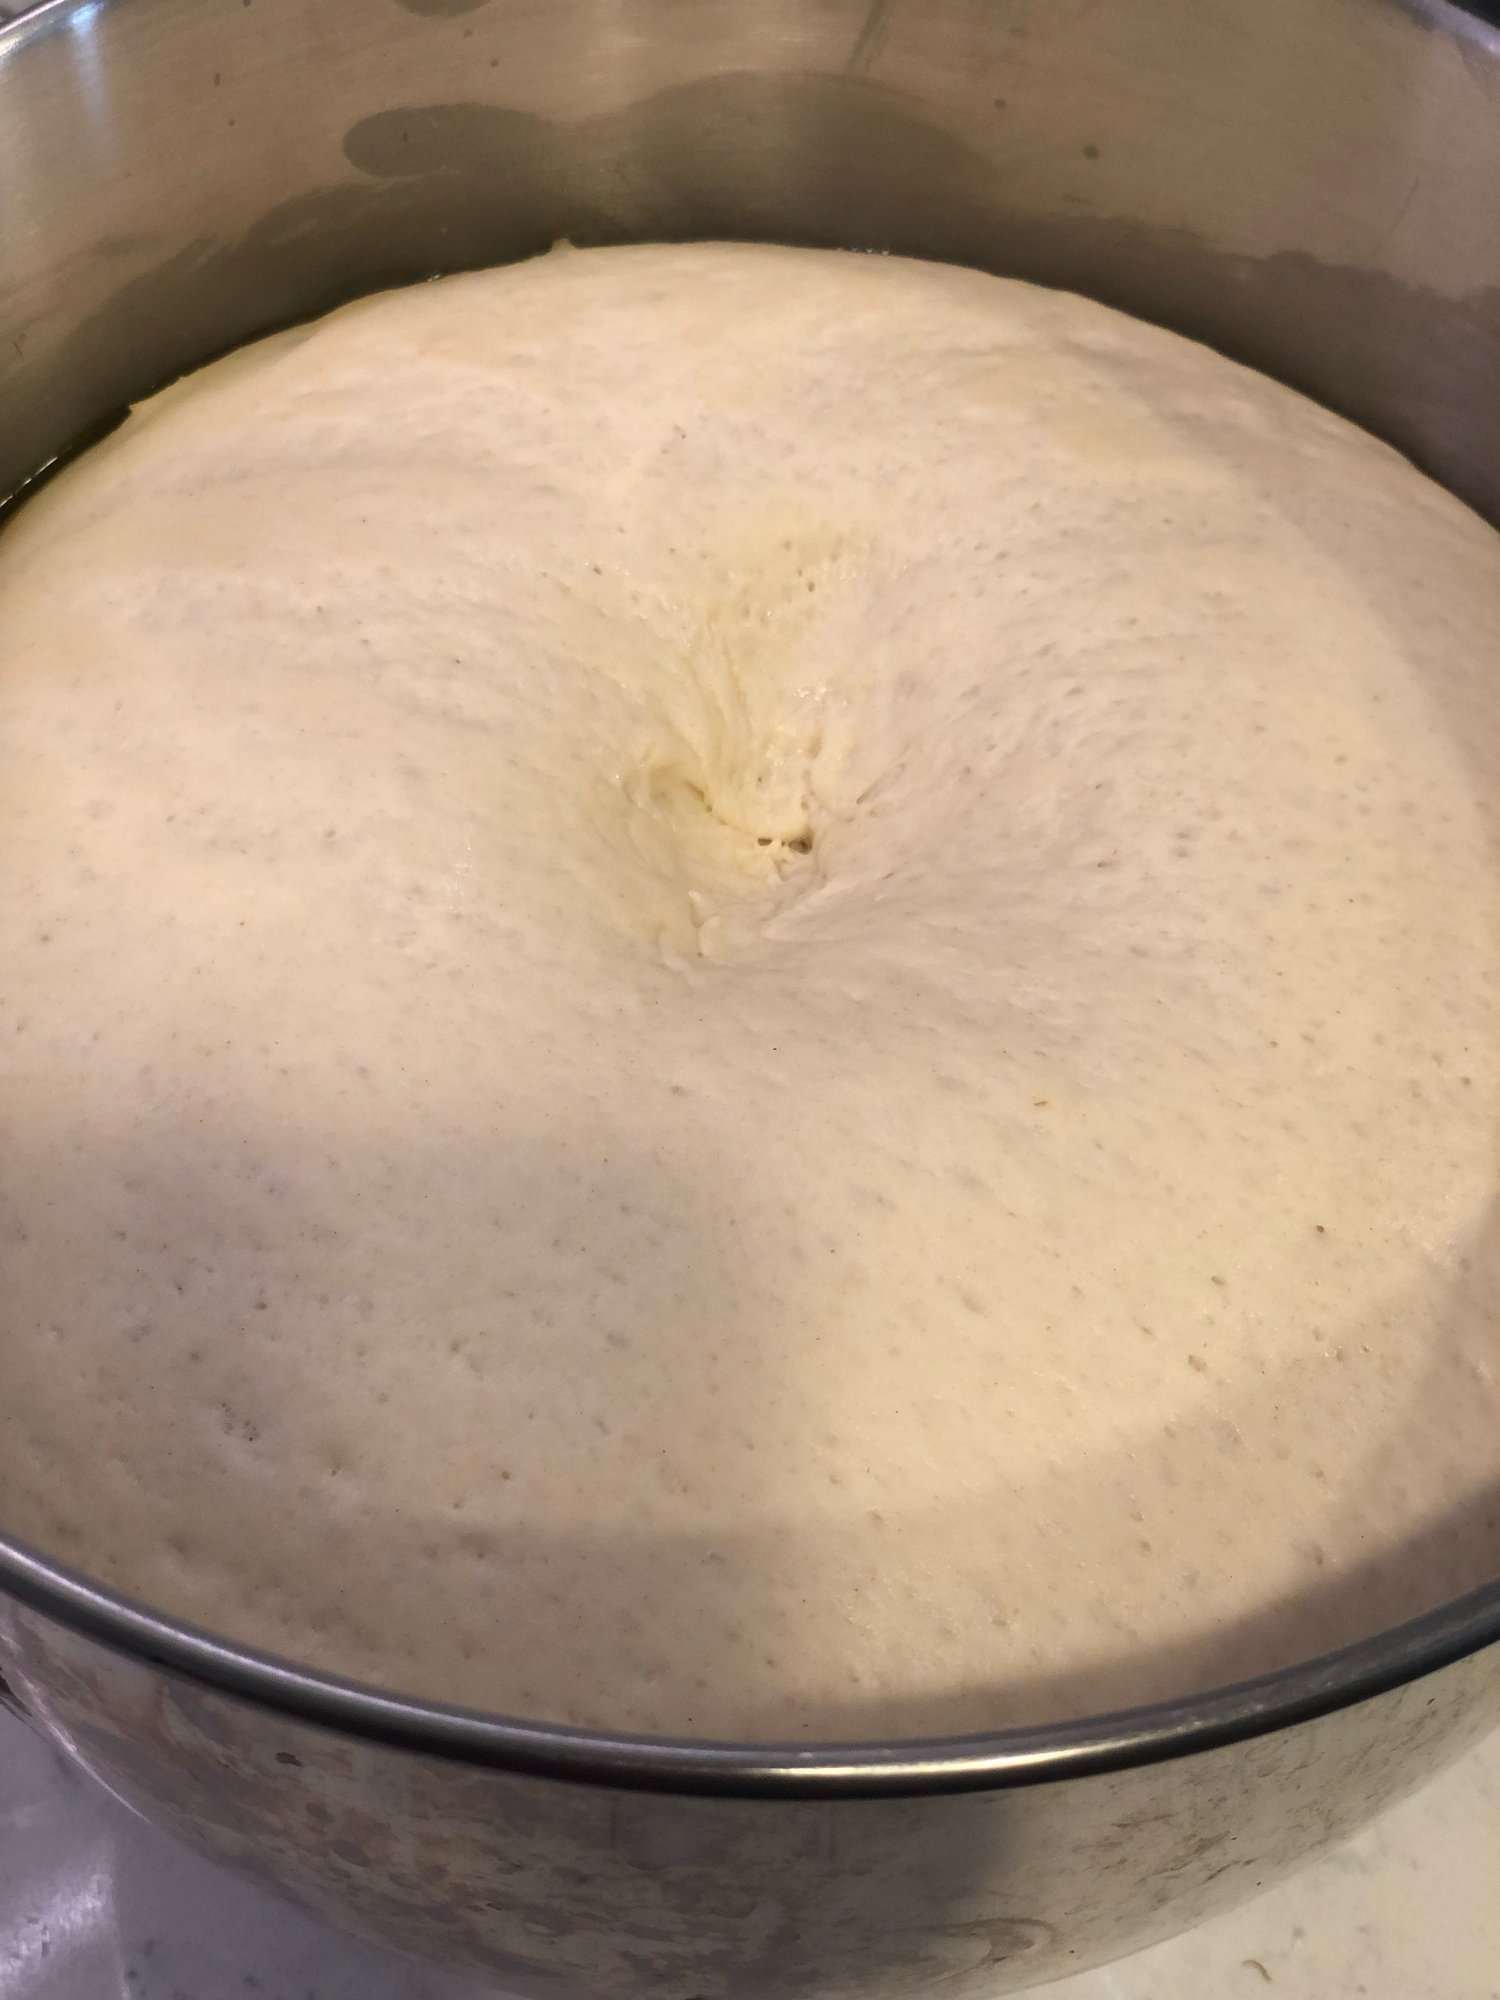 proof pizza dough in instant pot